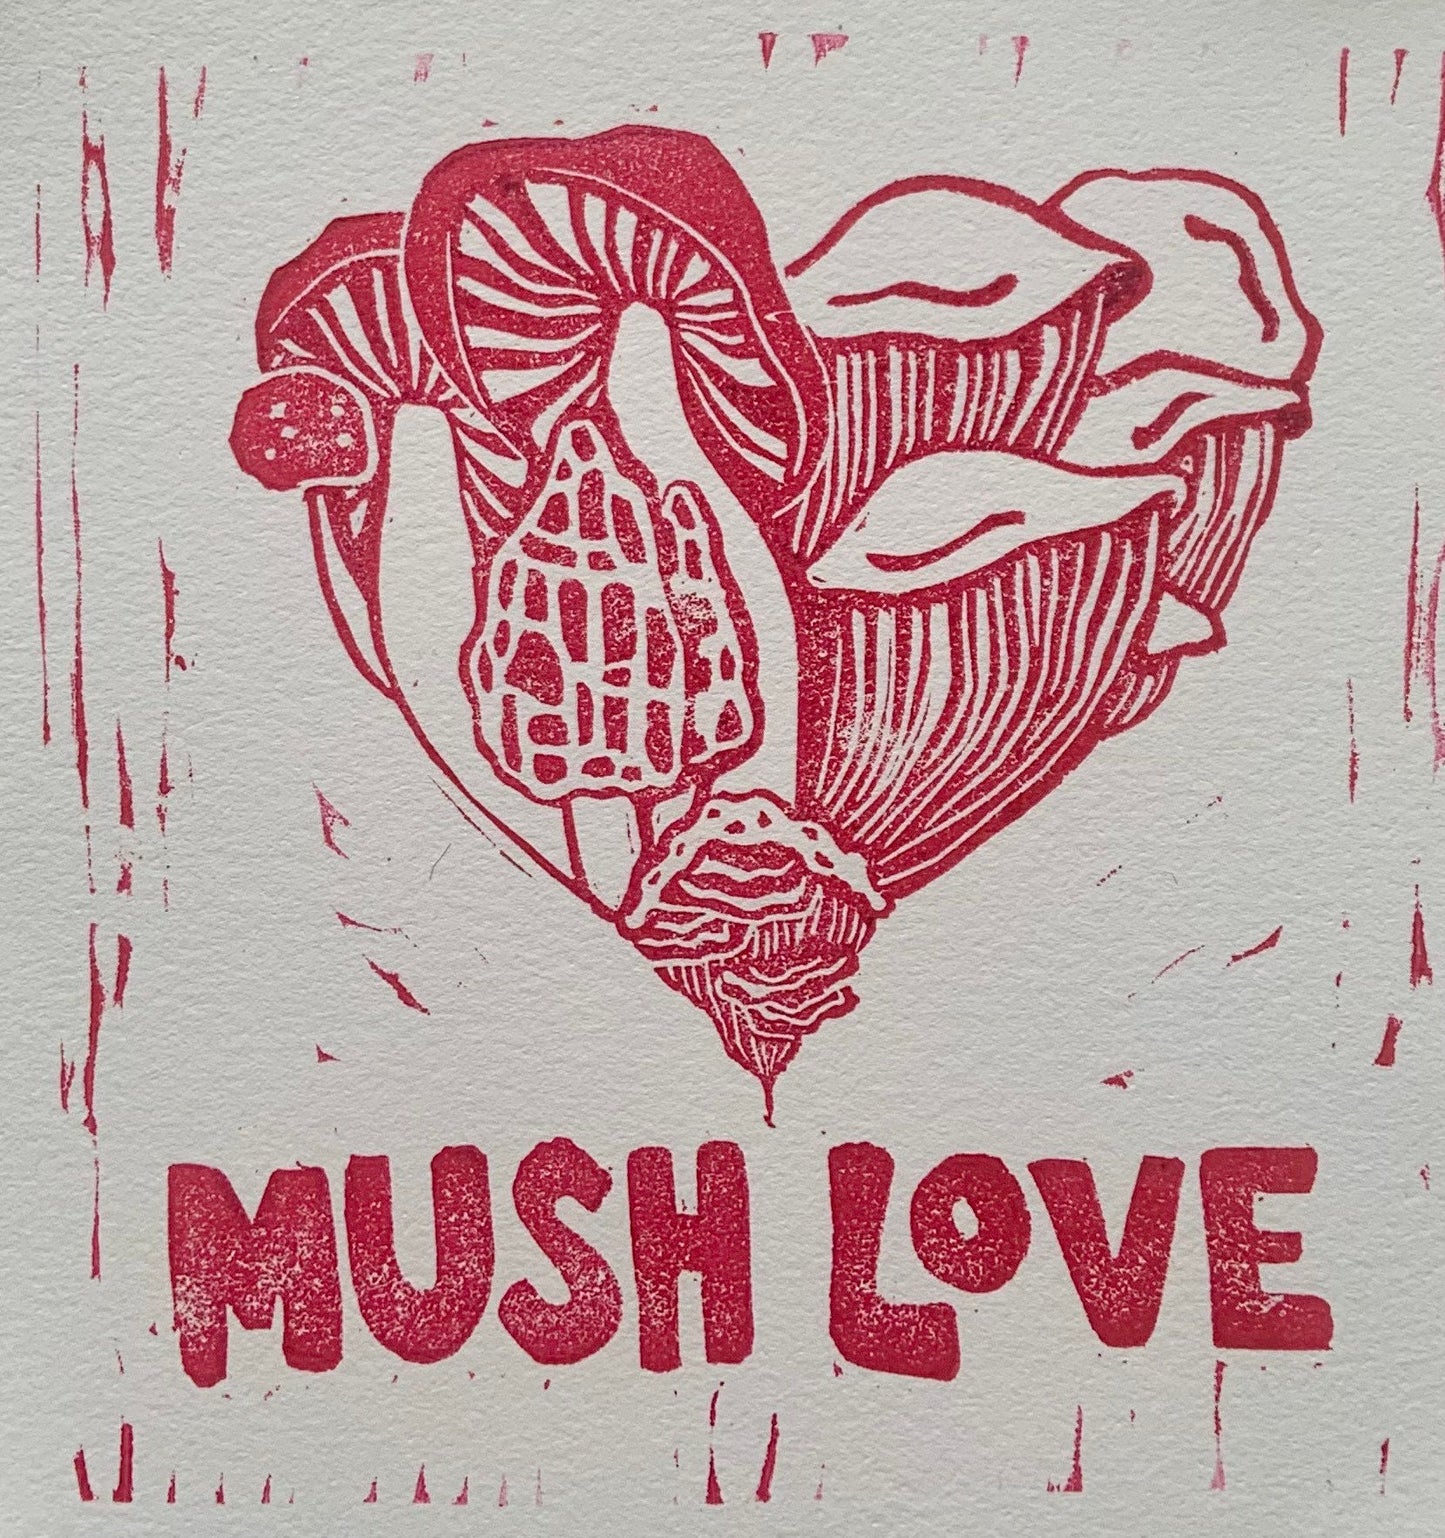 Mush Love - Original Linocut